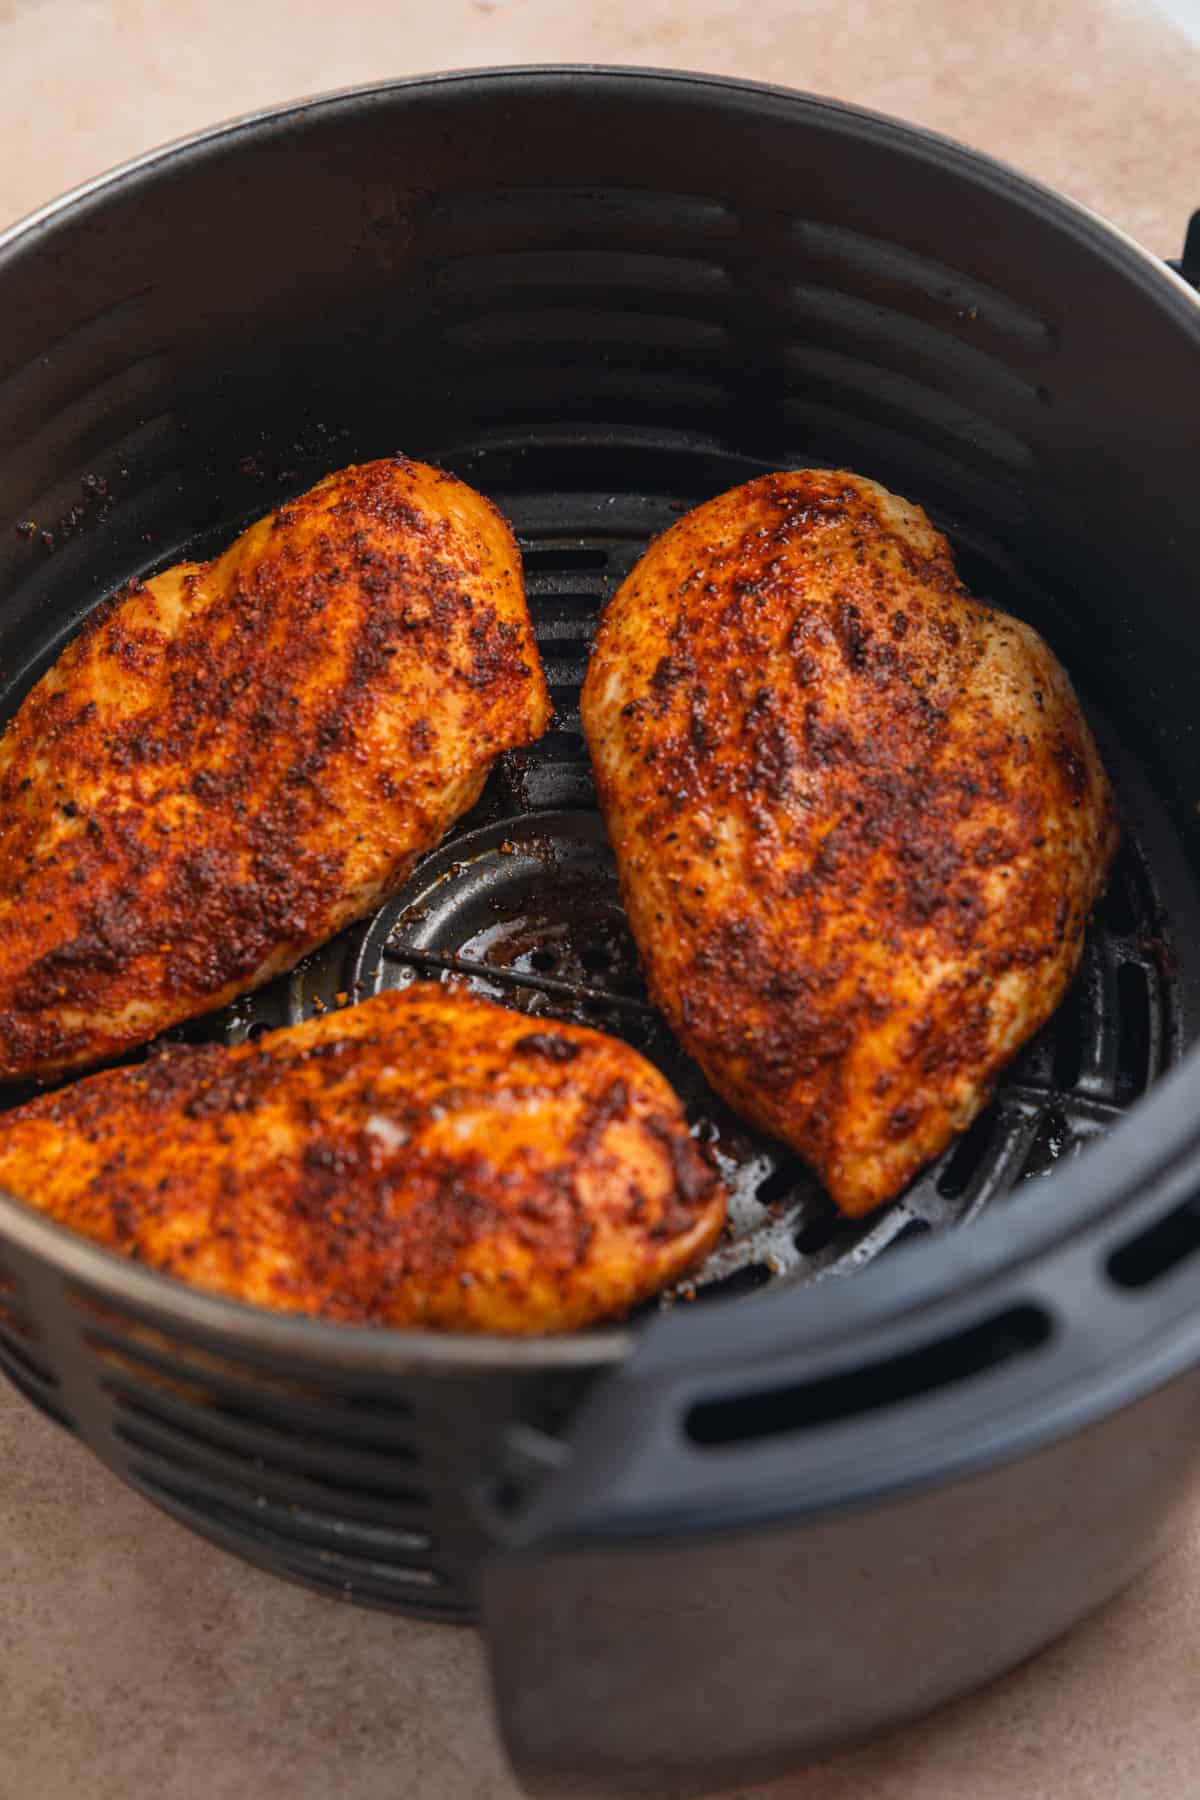 Chicken breast in air fryer after flipping.